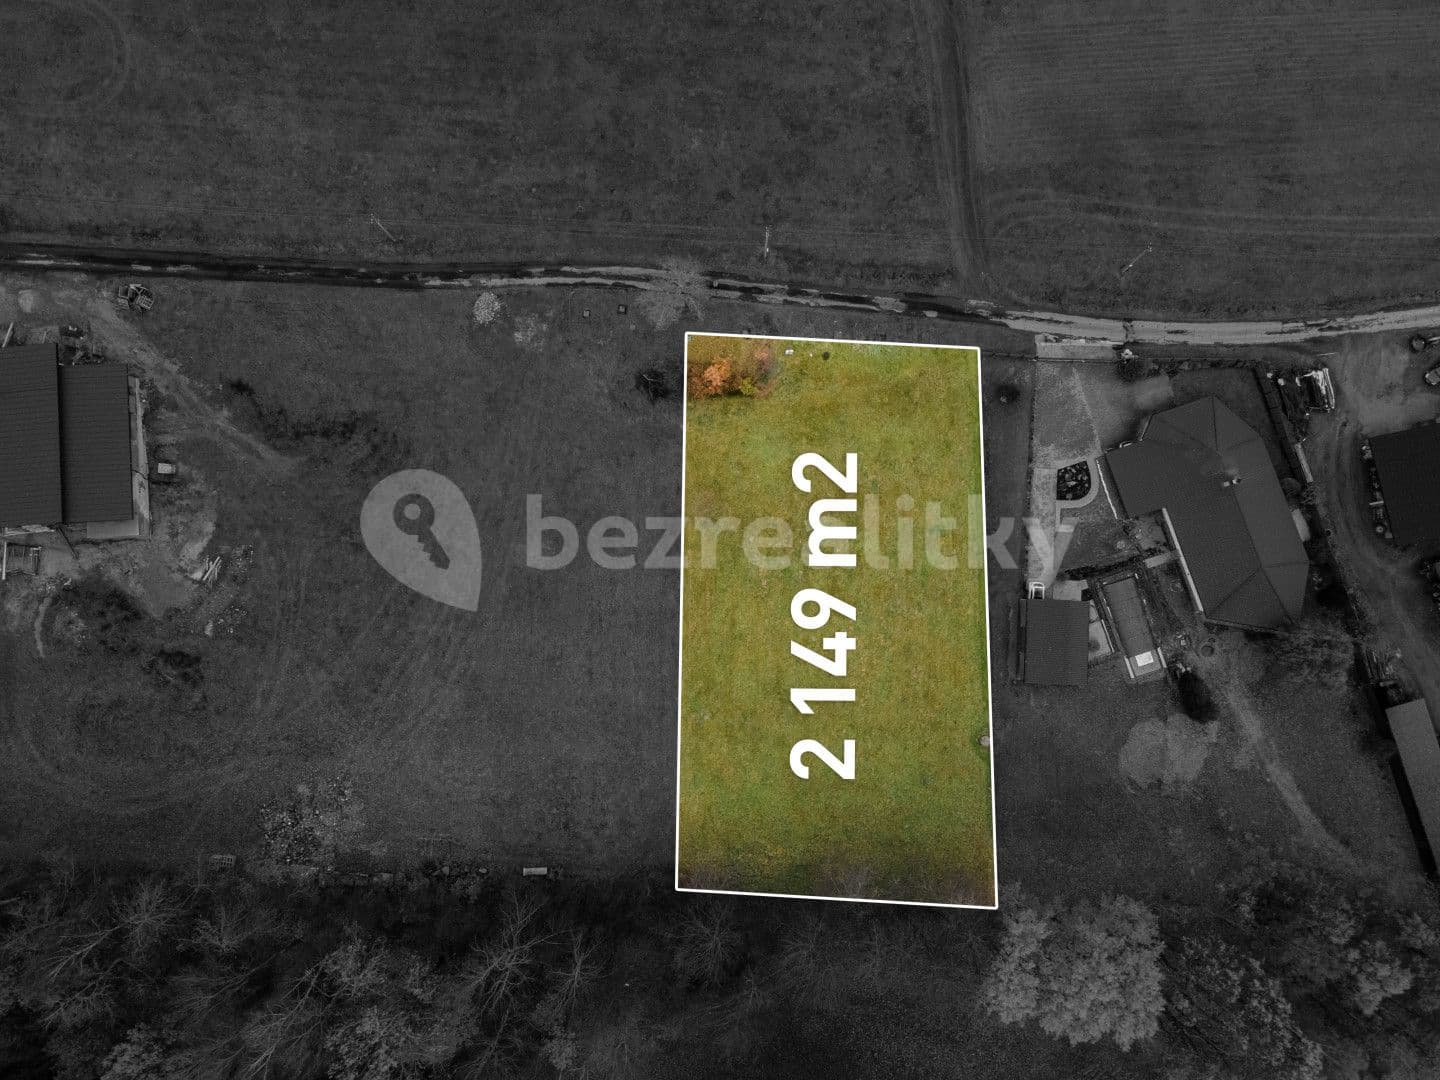 Predaj pozemku 2.149 m², Písek, Moravskoslezský kraj